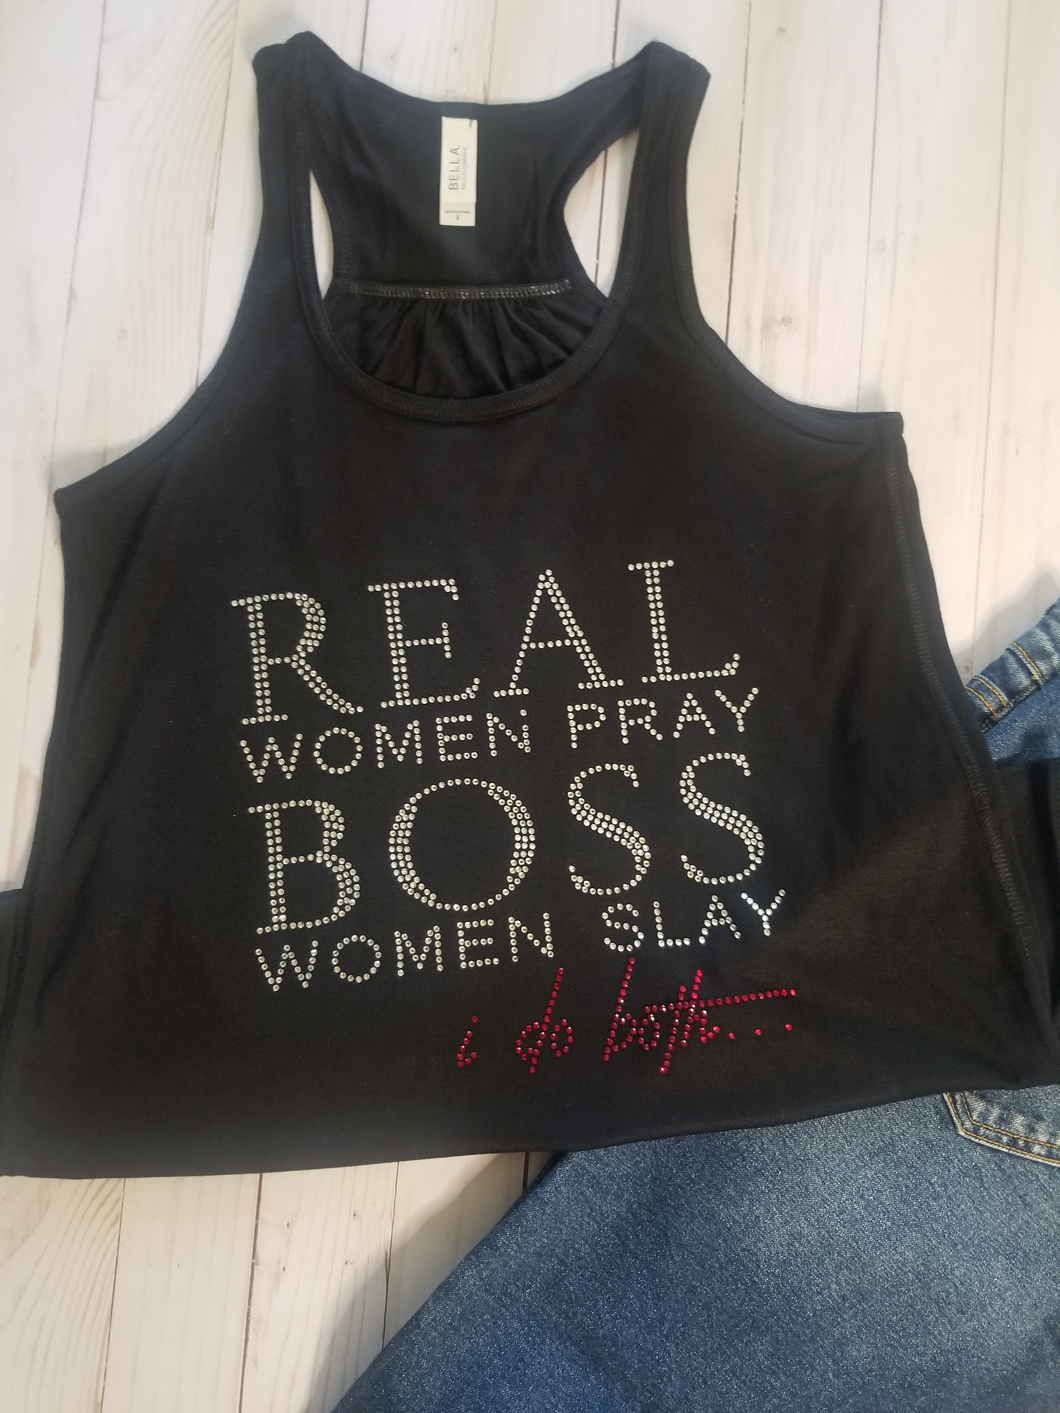 Real Women Pray/Boss Women Slay, I do both 